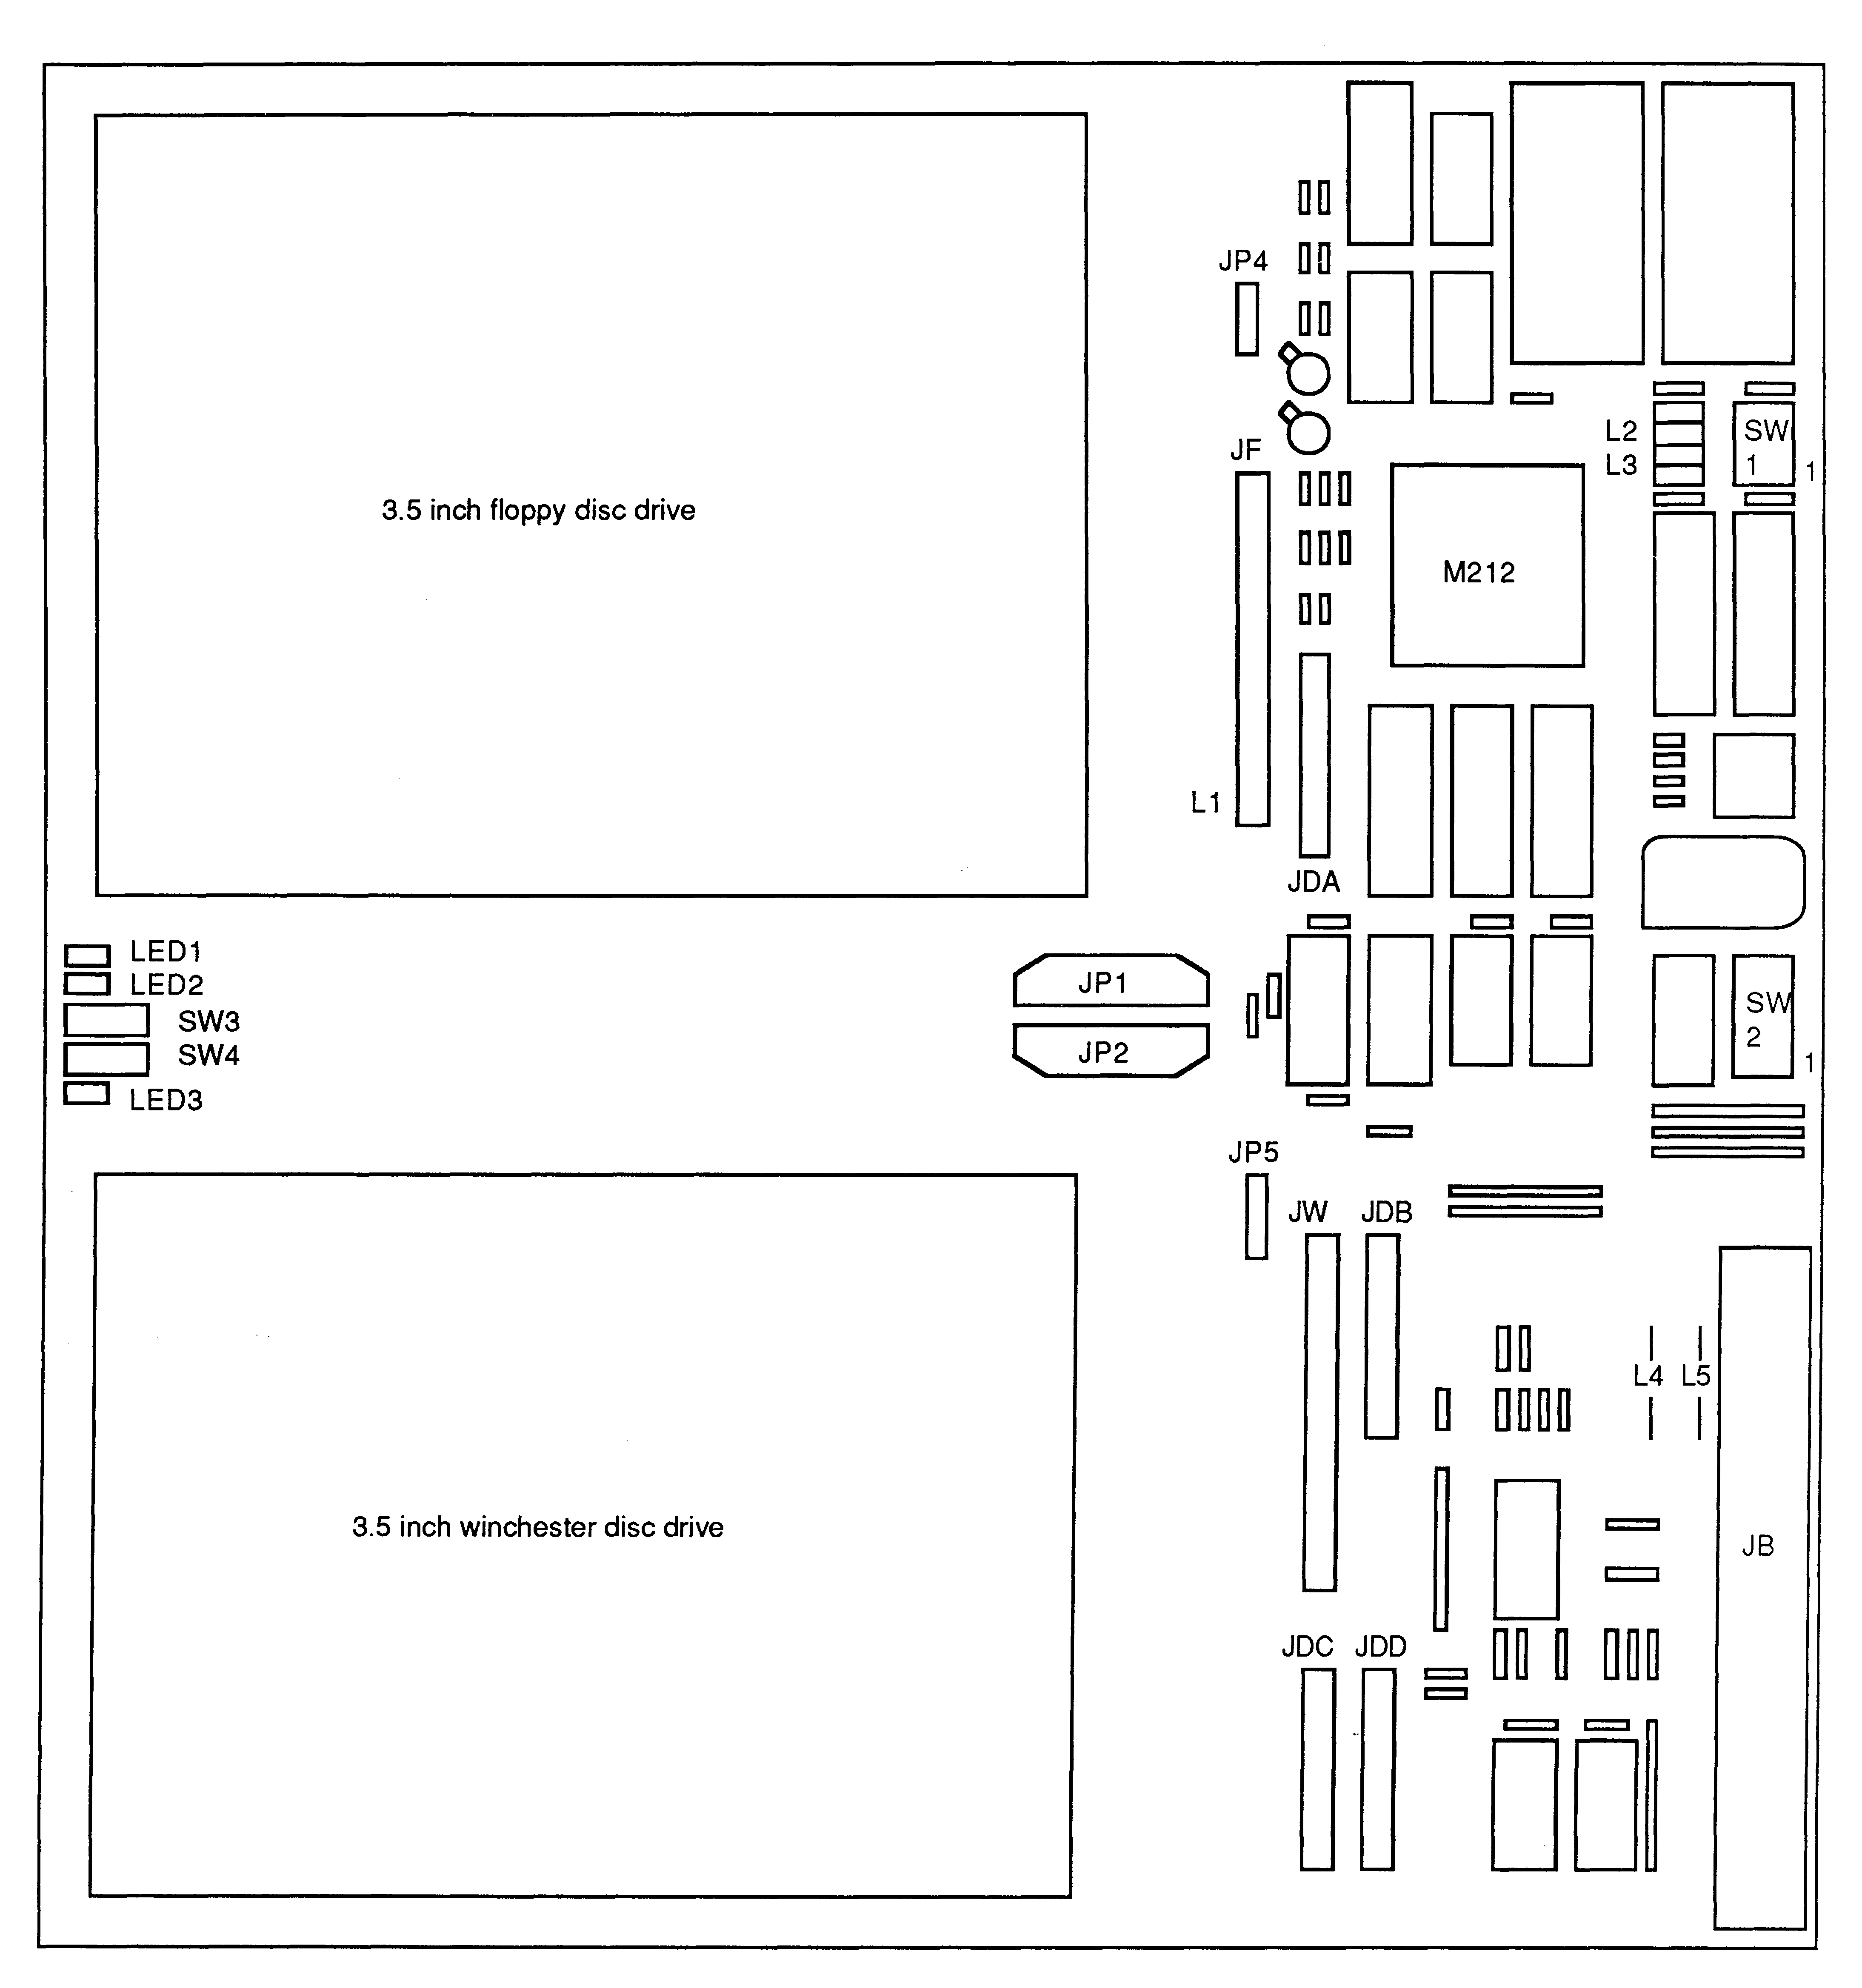 IMS B005 component layout